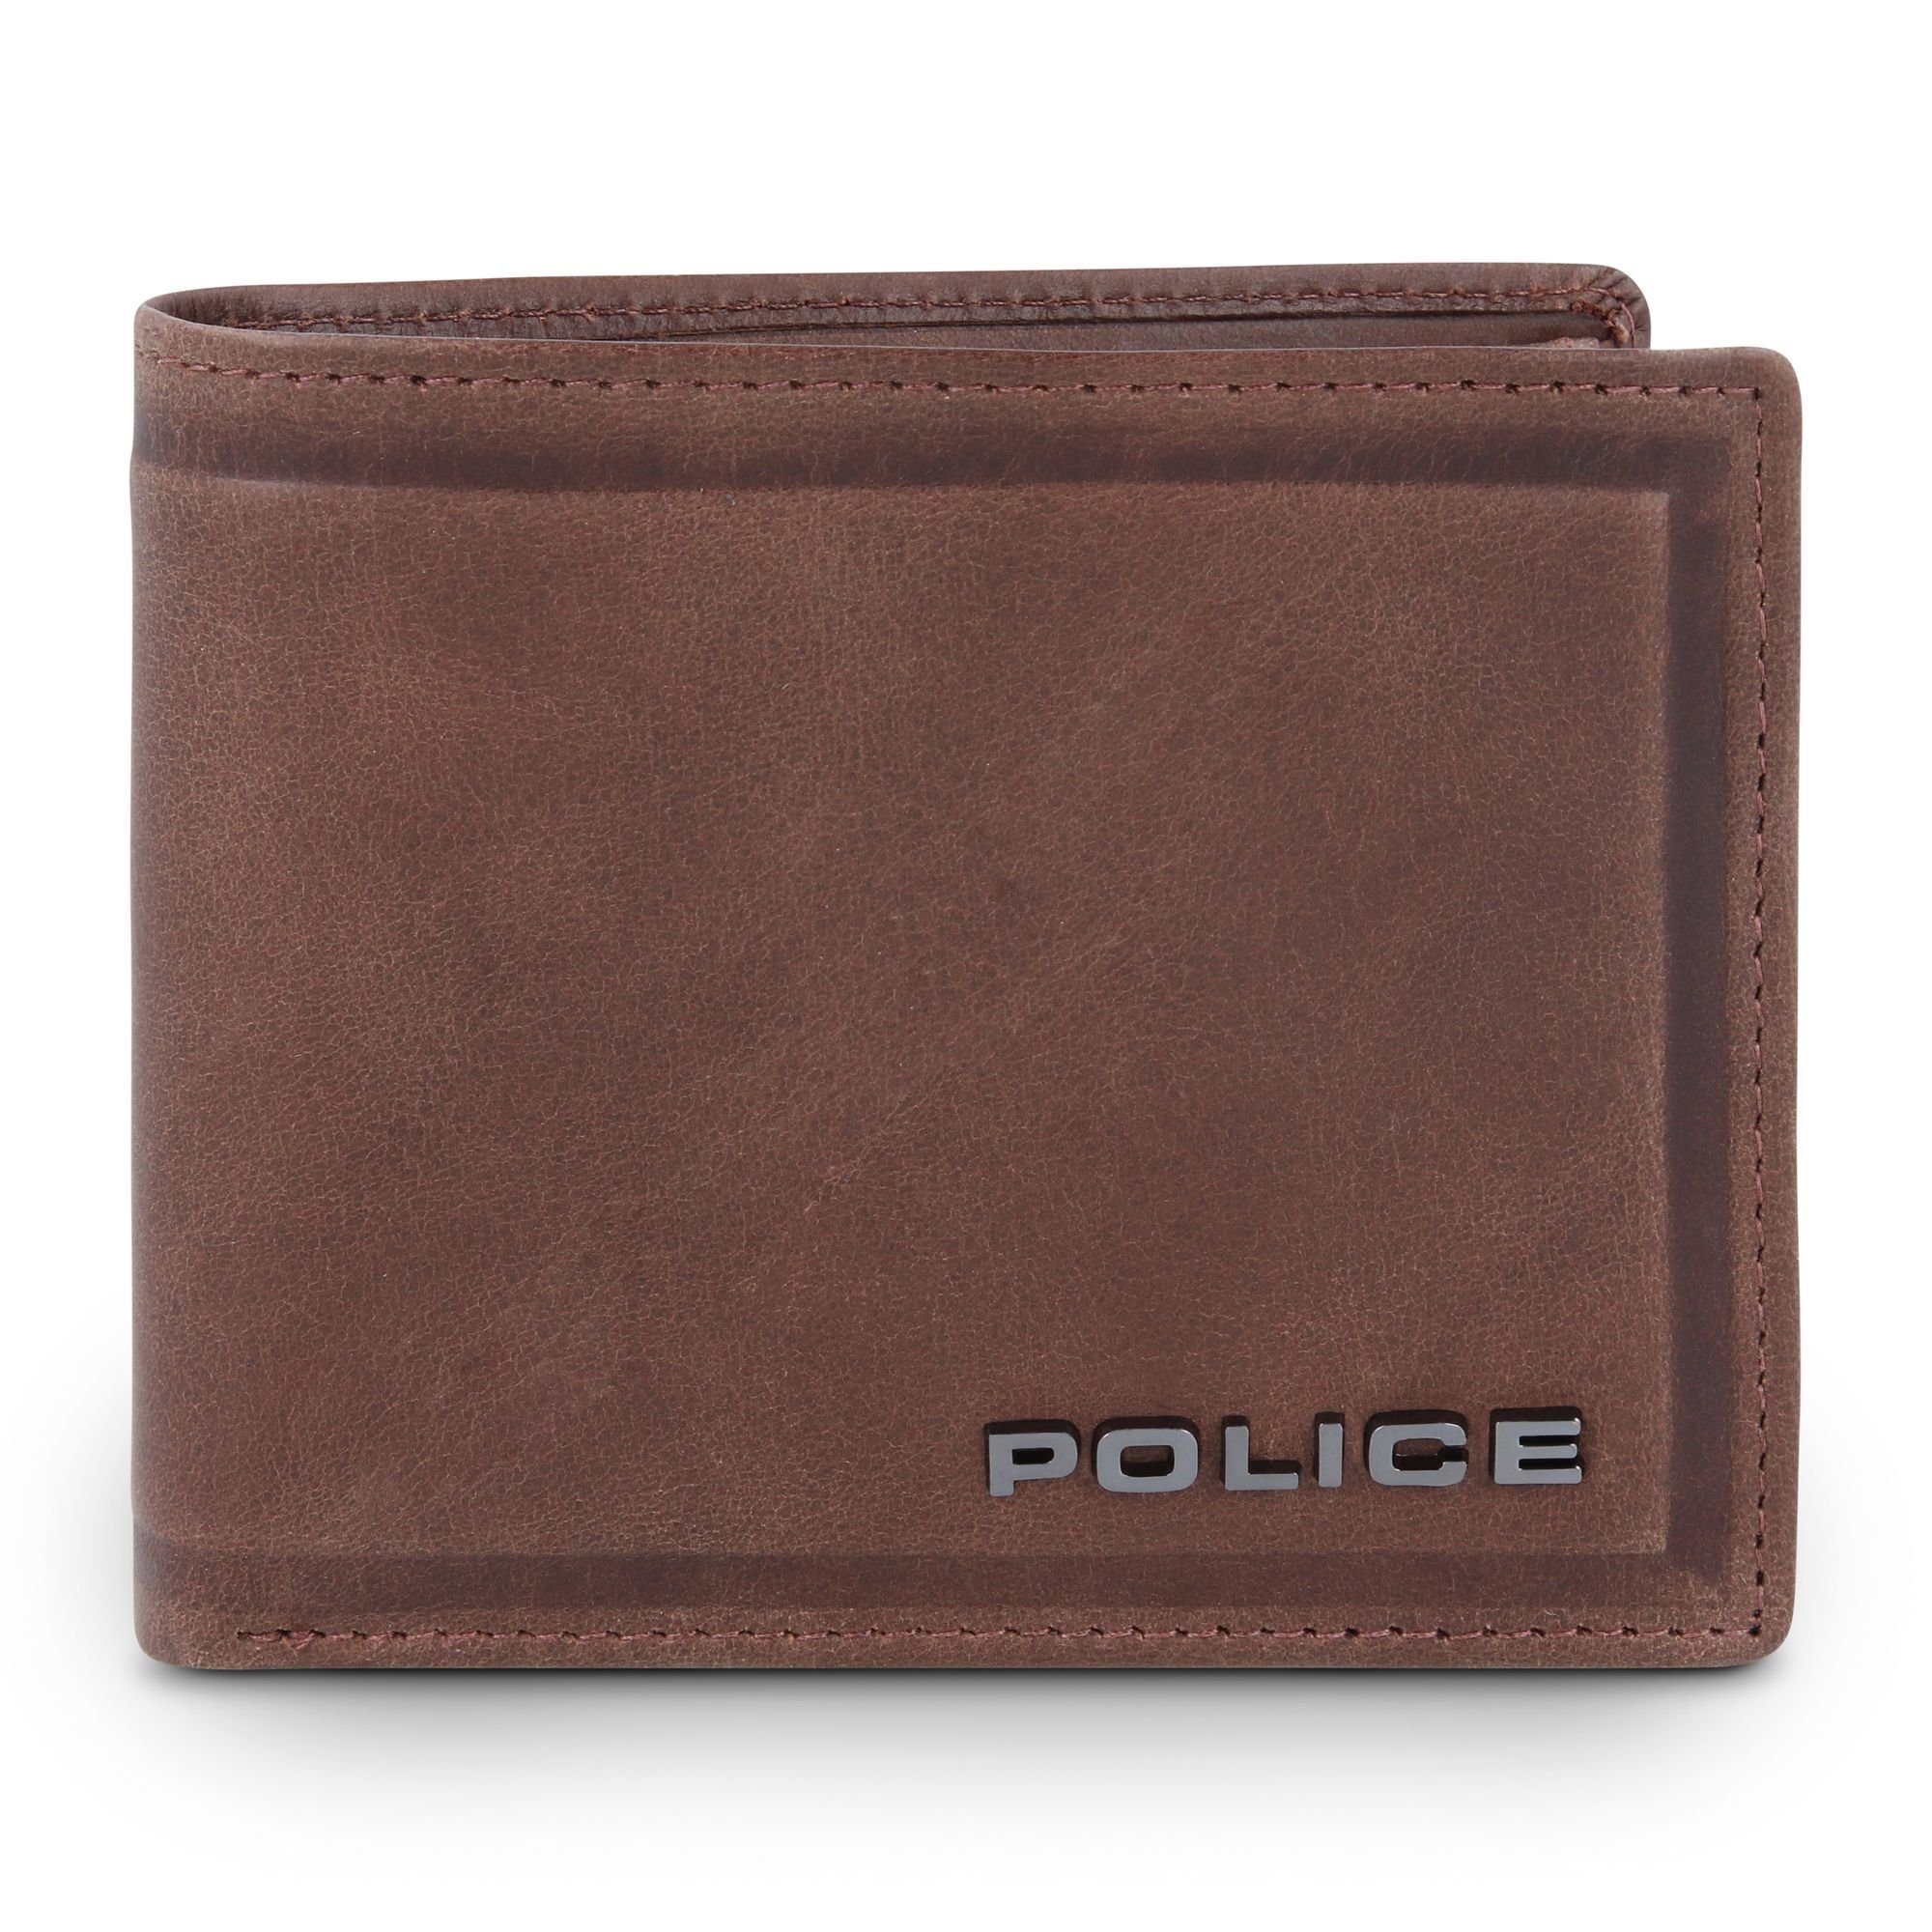 Leder Police Geldbörse, brown